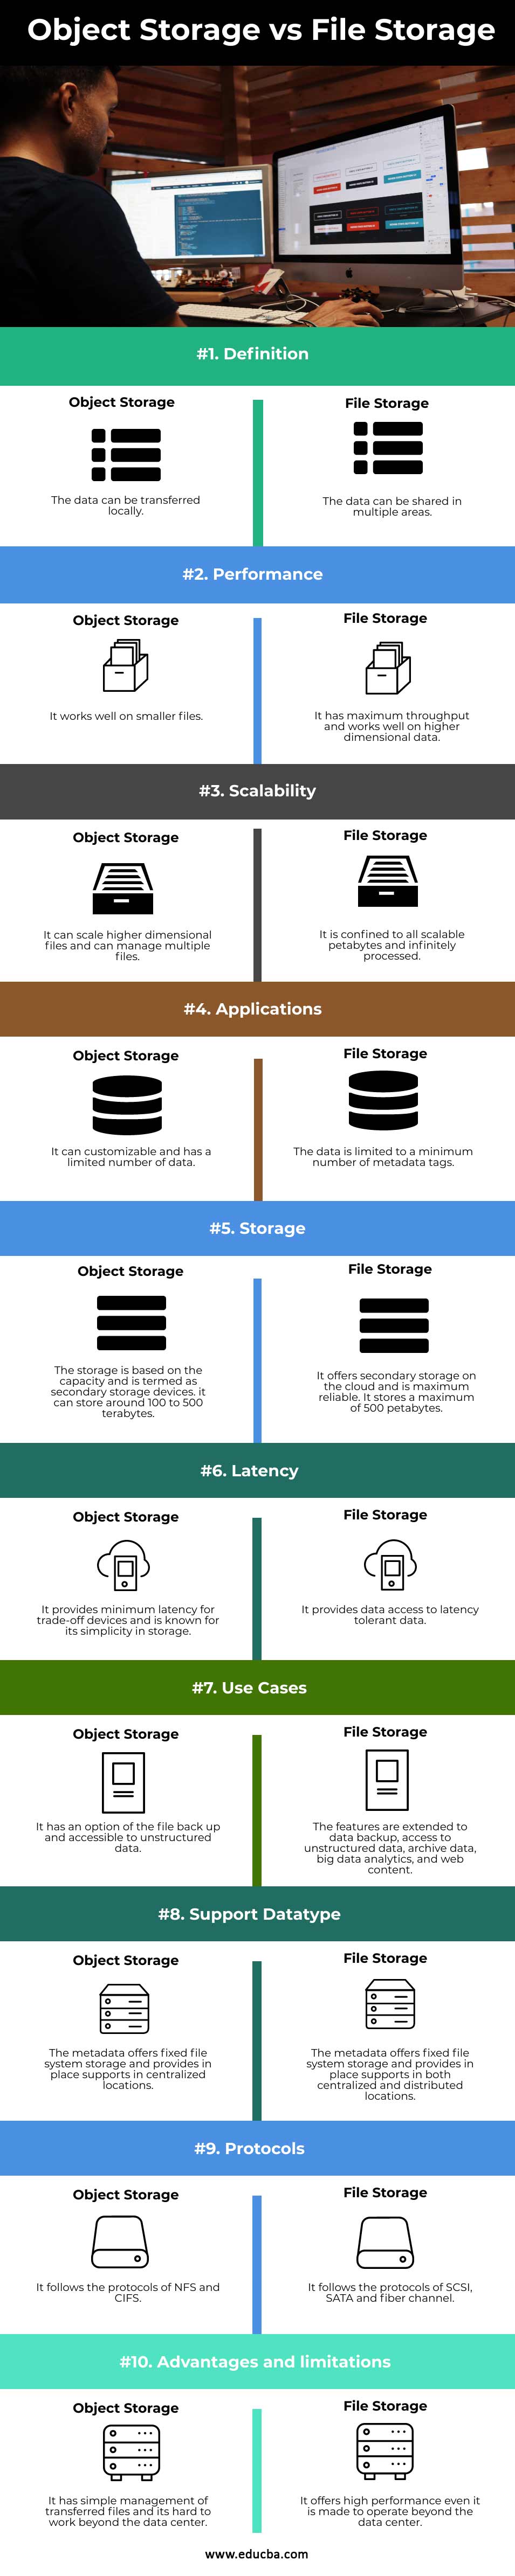 Object-Storage-vs-File-Storage-info